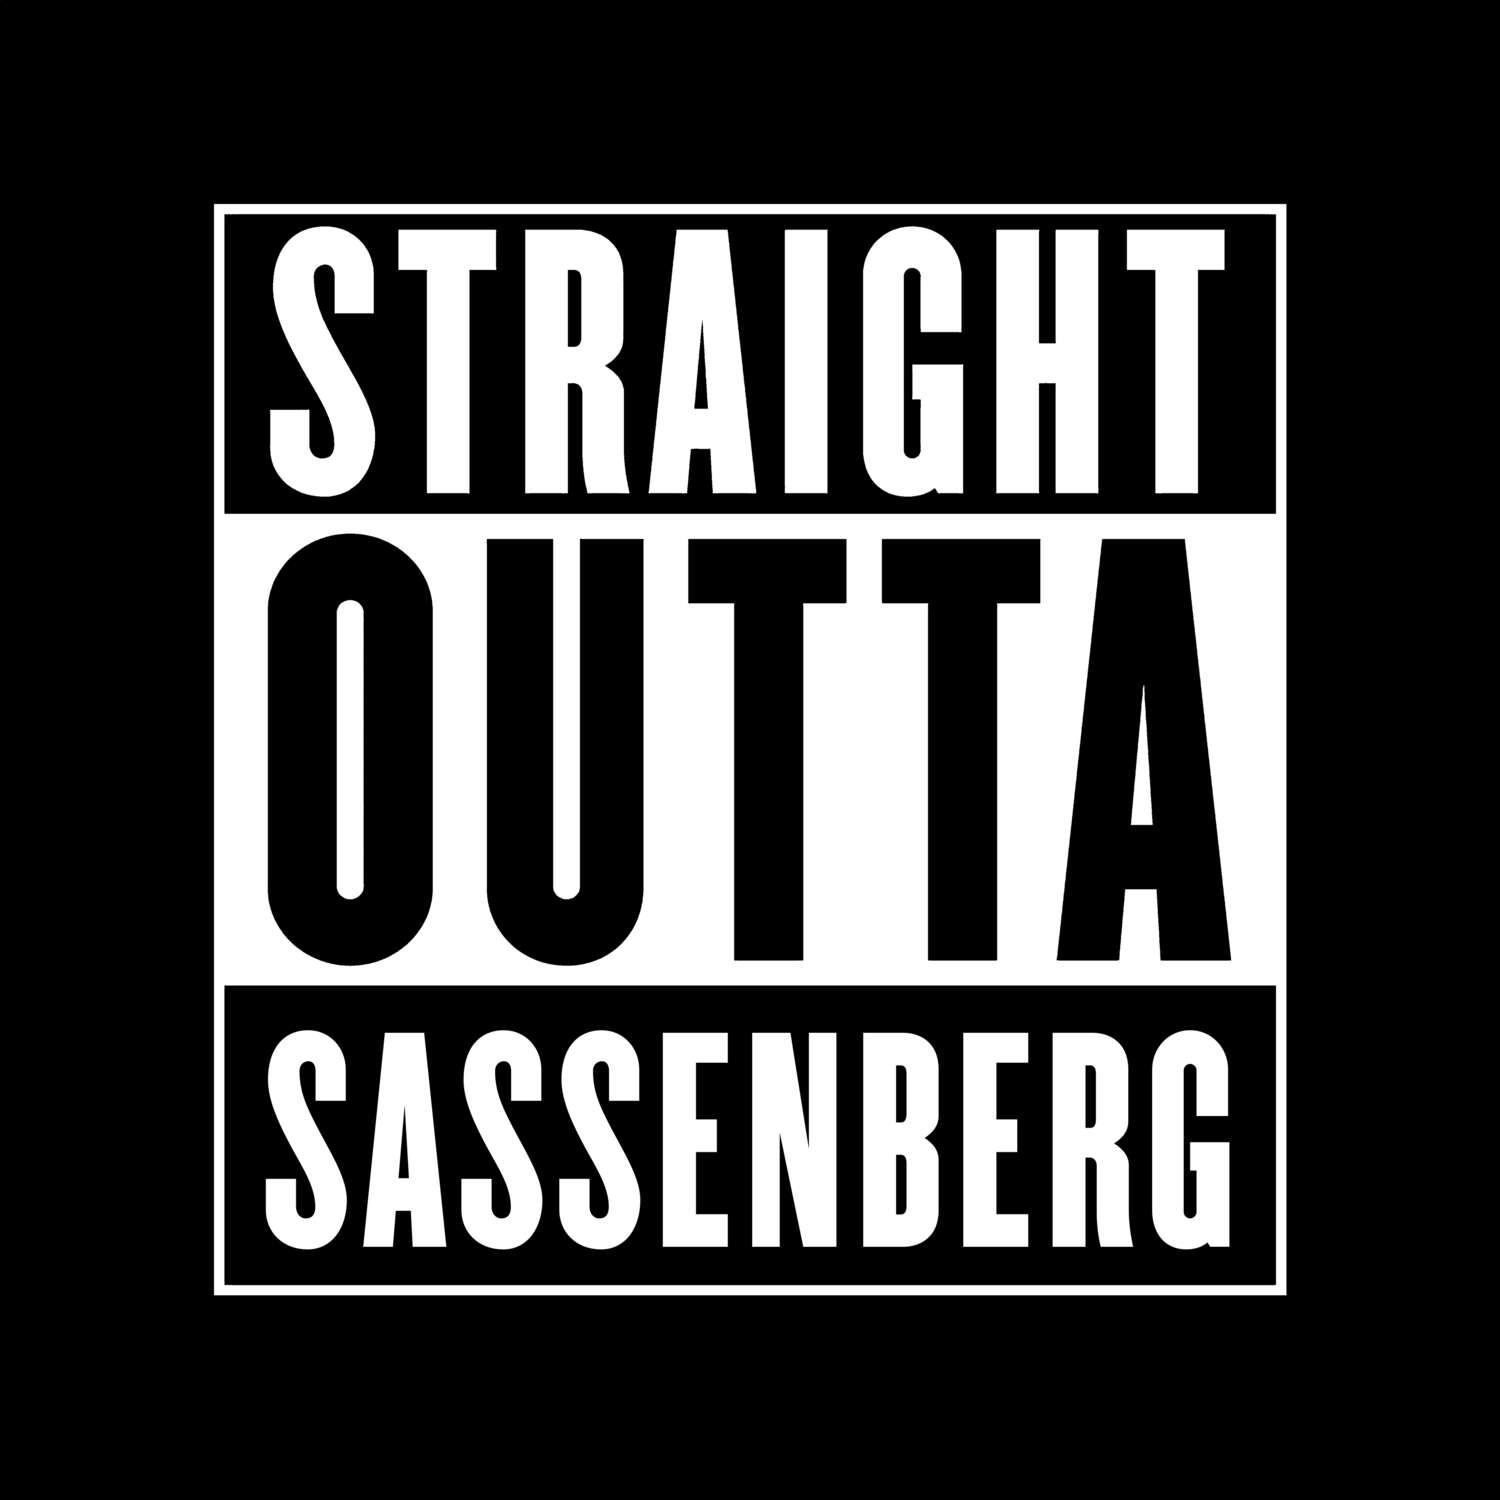 Sassenberg T-Shirt »Straight Outta«